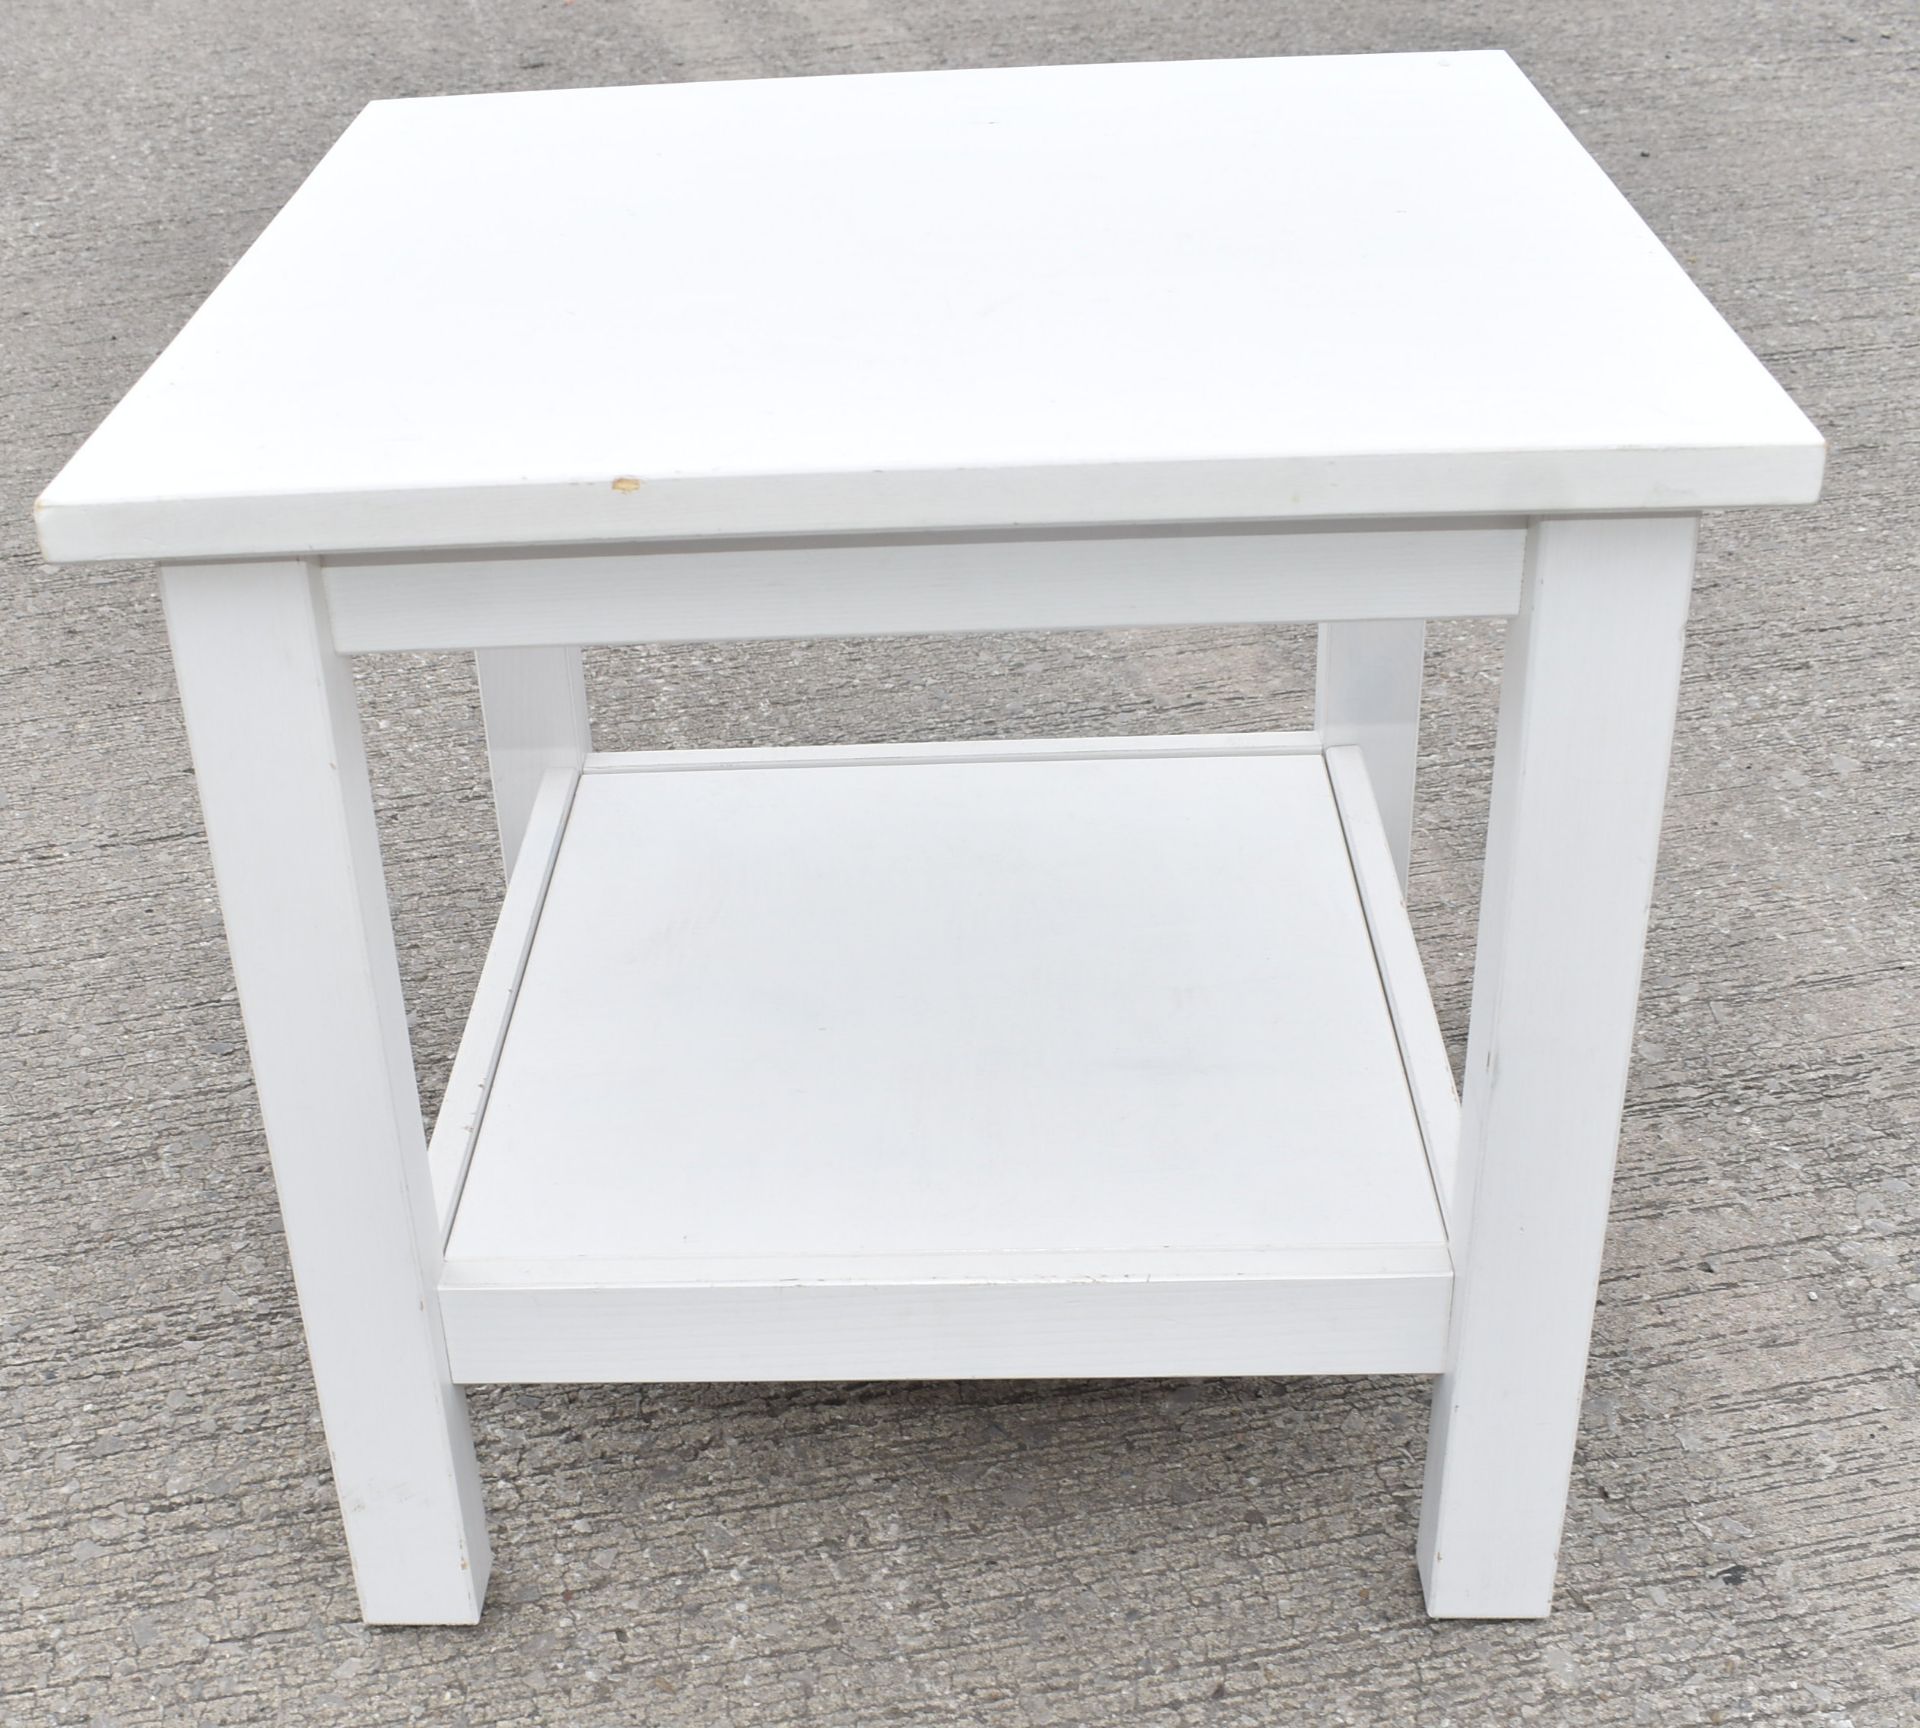 1 x White Square Wooden Table - 56x56x51cm - Ref: K289 - CL905 - Location: Altrincham WA14*Stock - Image 8 of 9